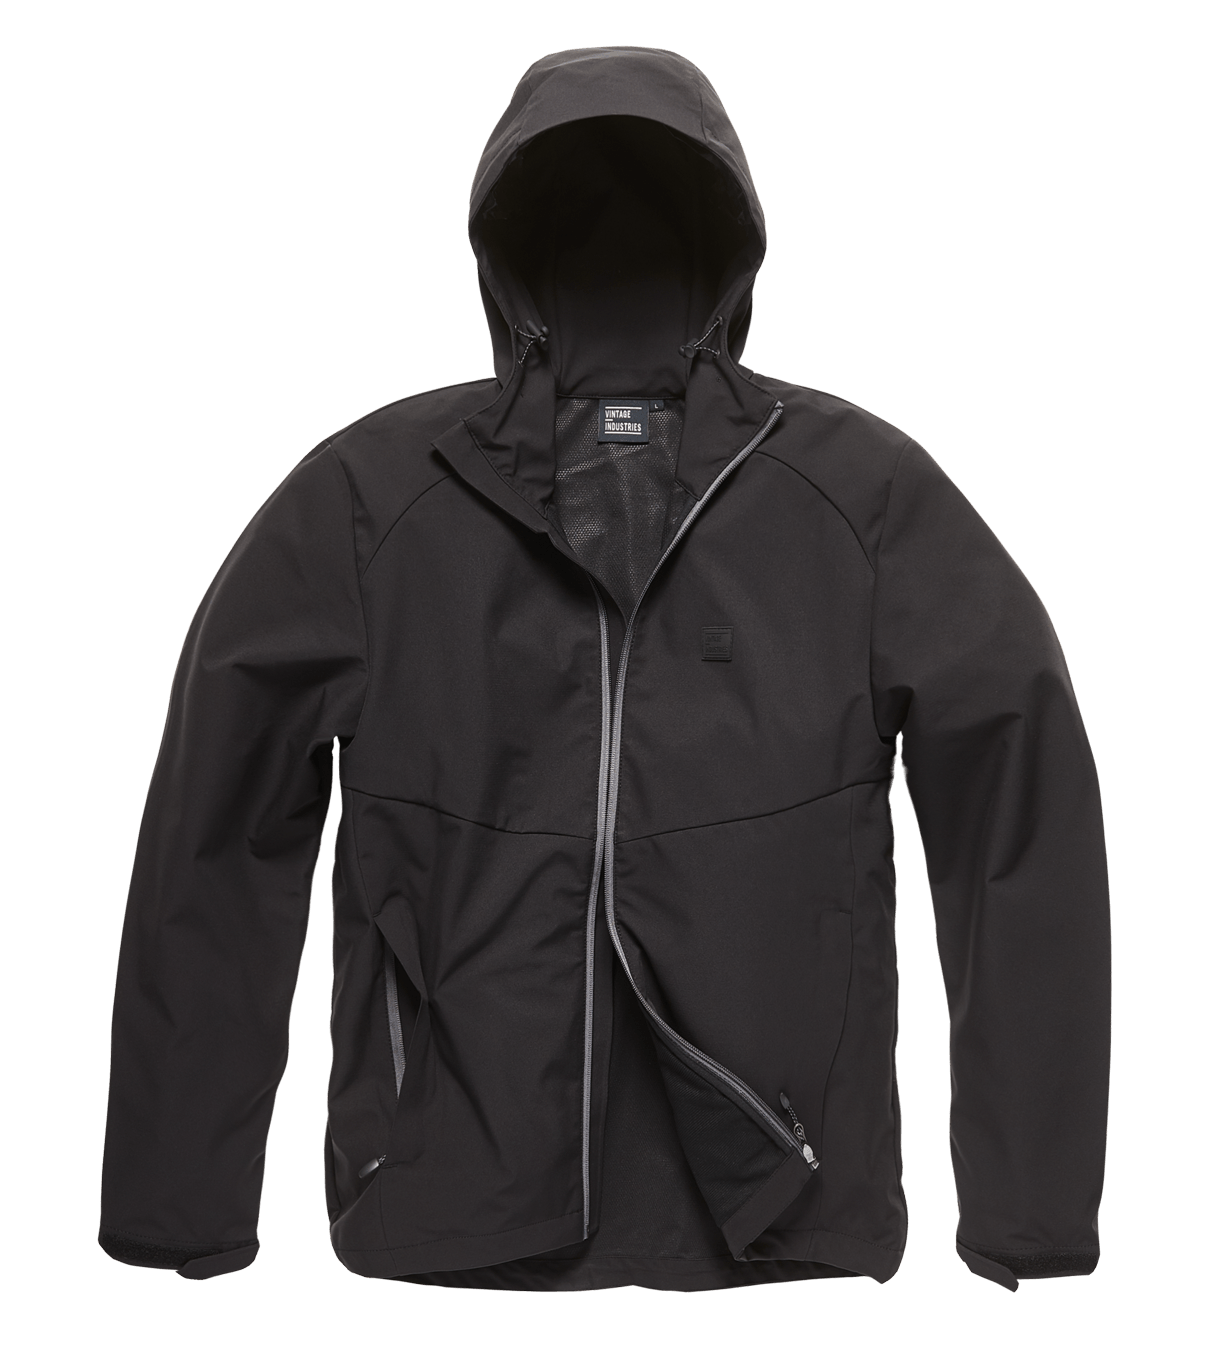 30104 - Ather softshell jacket